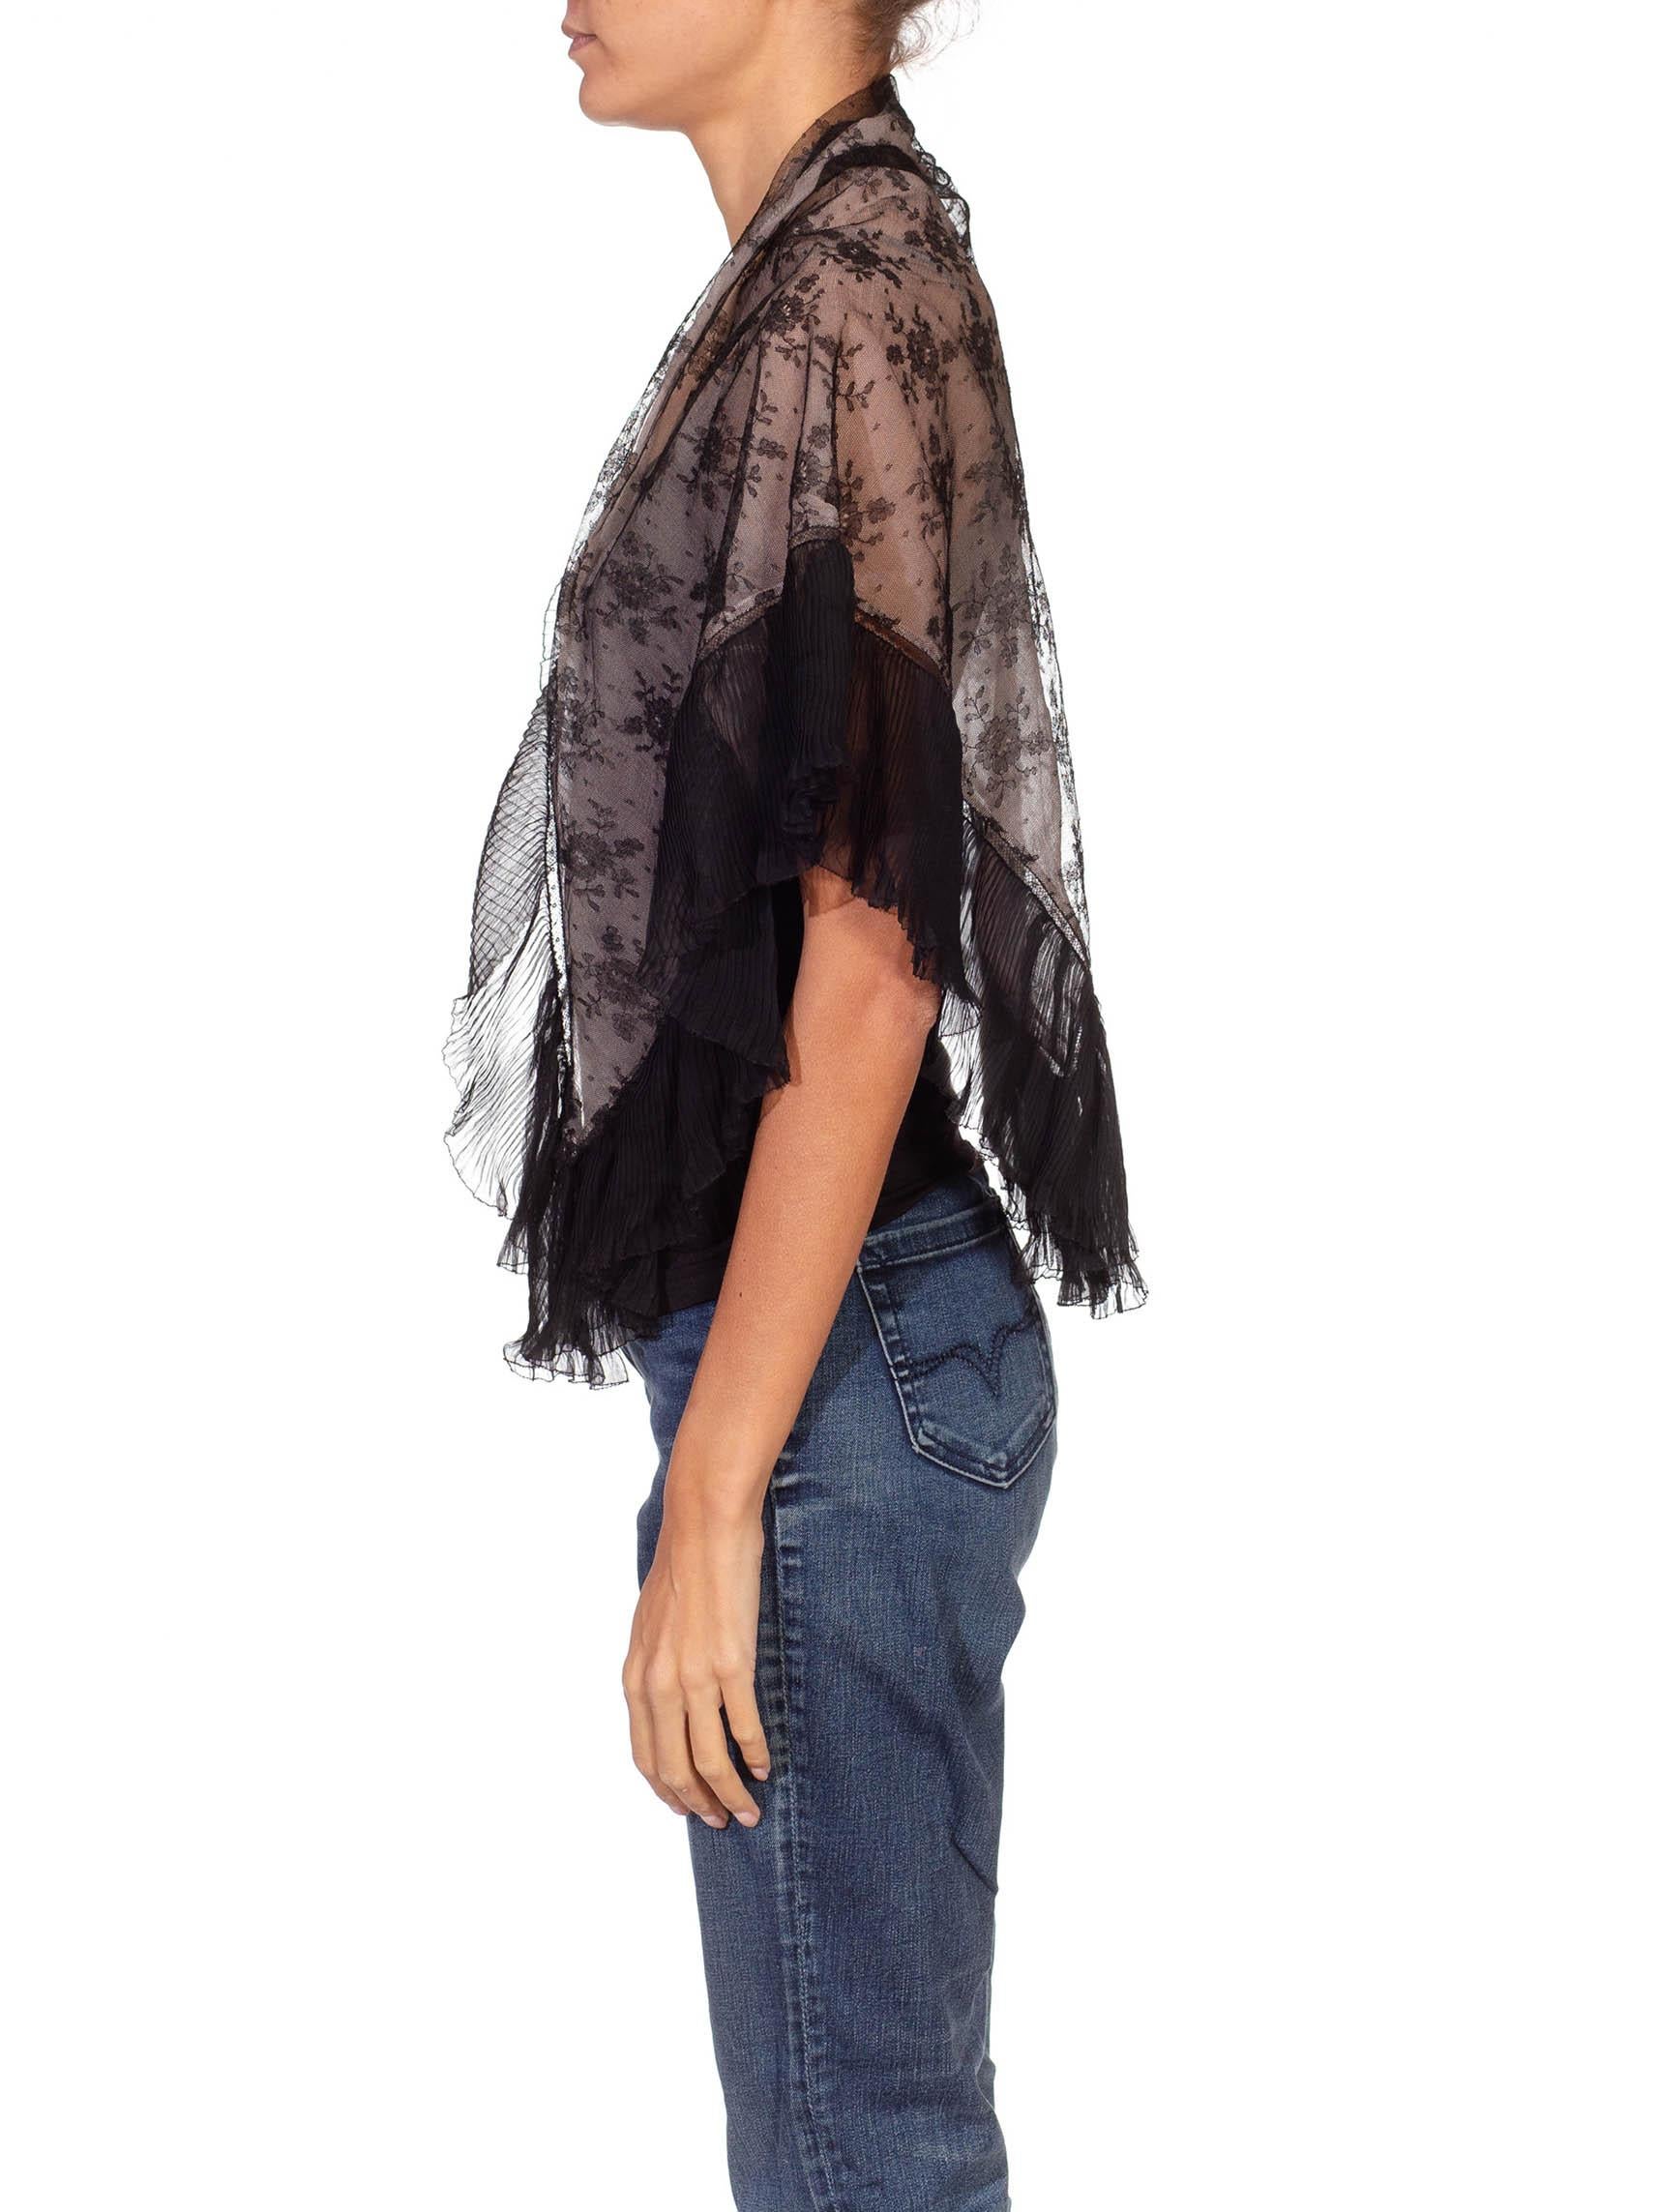 victorian shawl